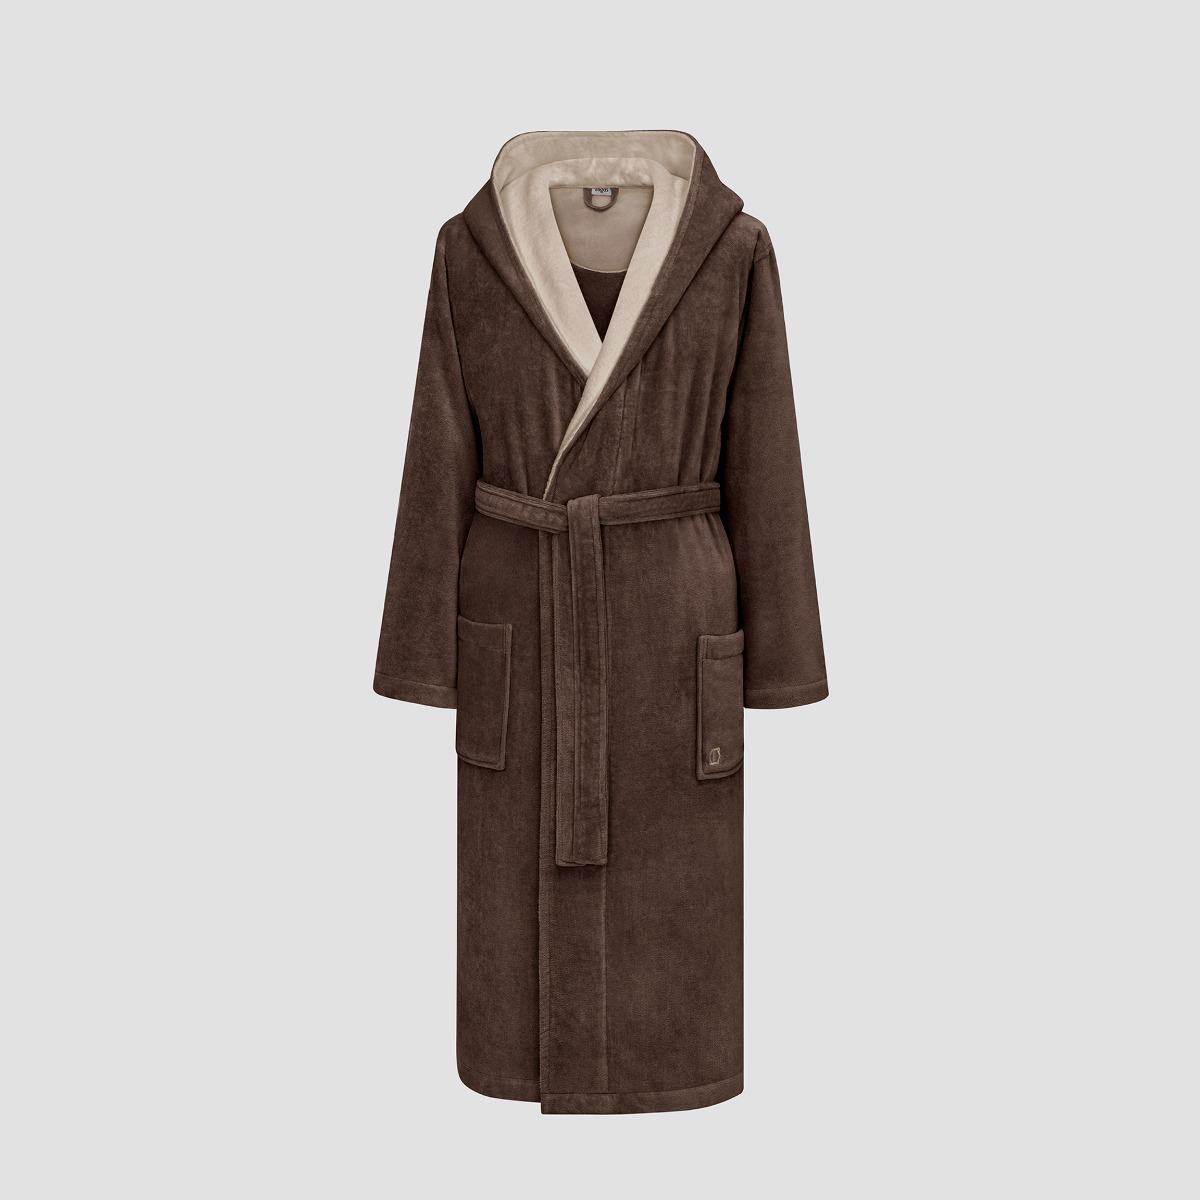 Халат Togas Арт Лайн коричневый с бежевым XL(52) халат togas арт лайн коричневый с бежевым 2xl 54